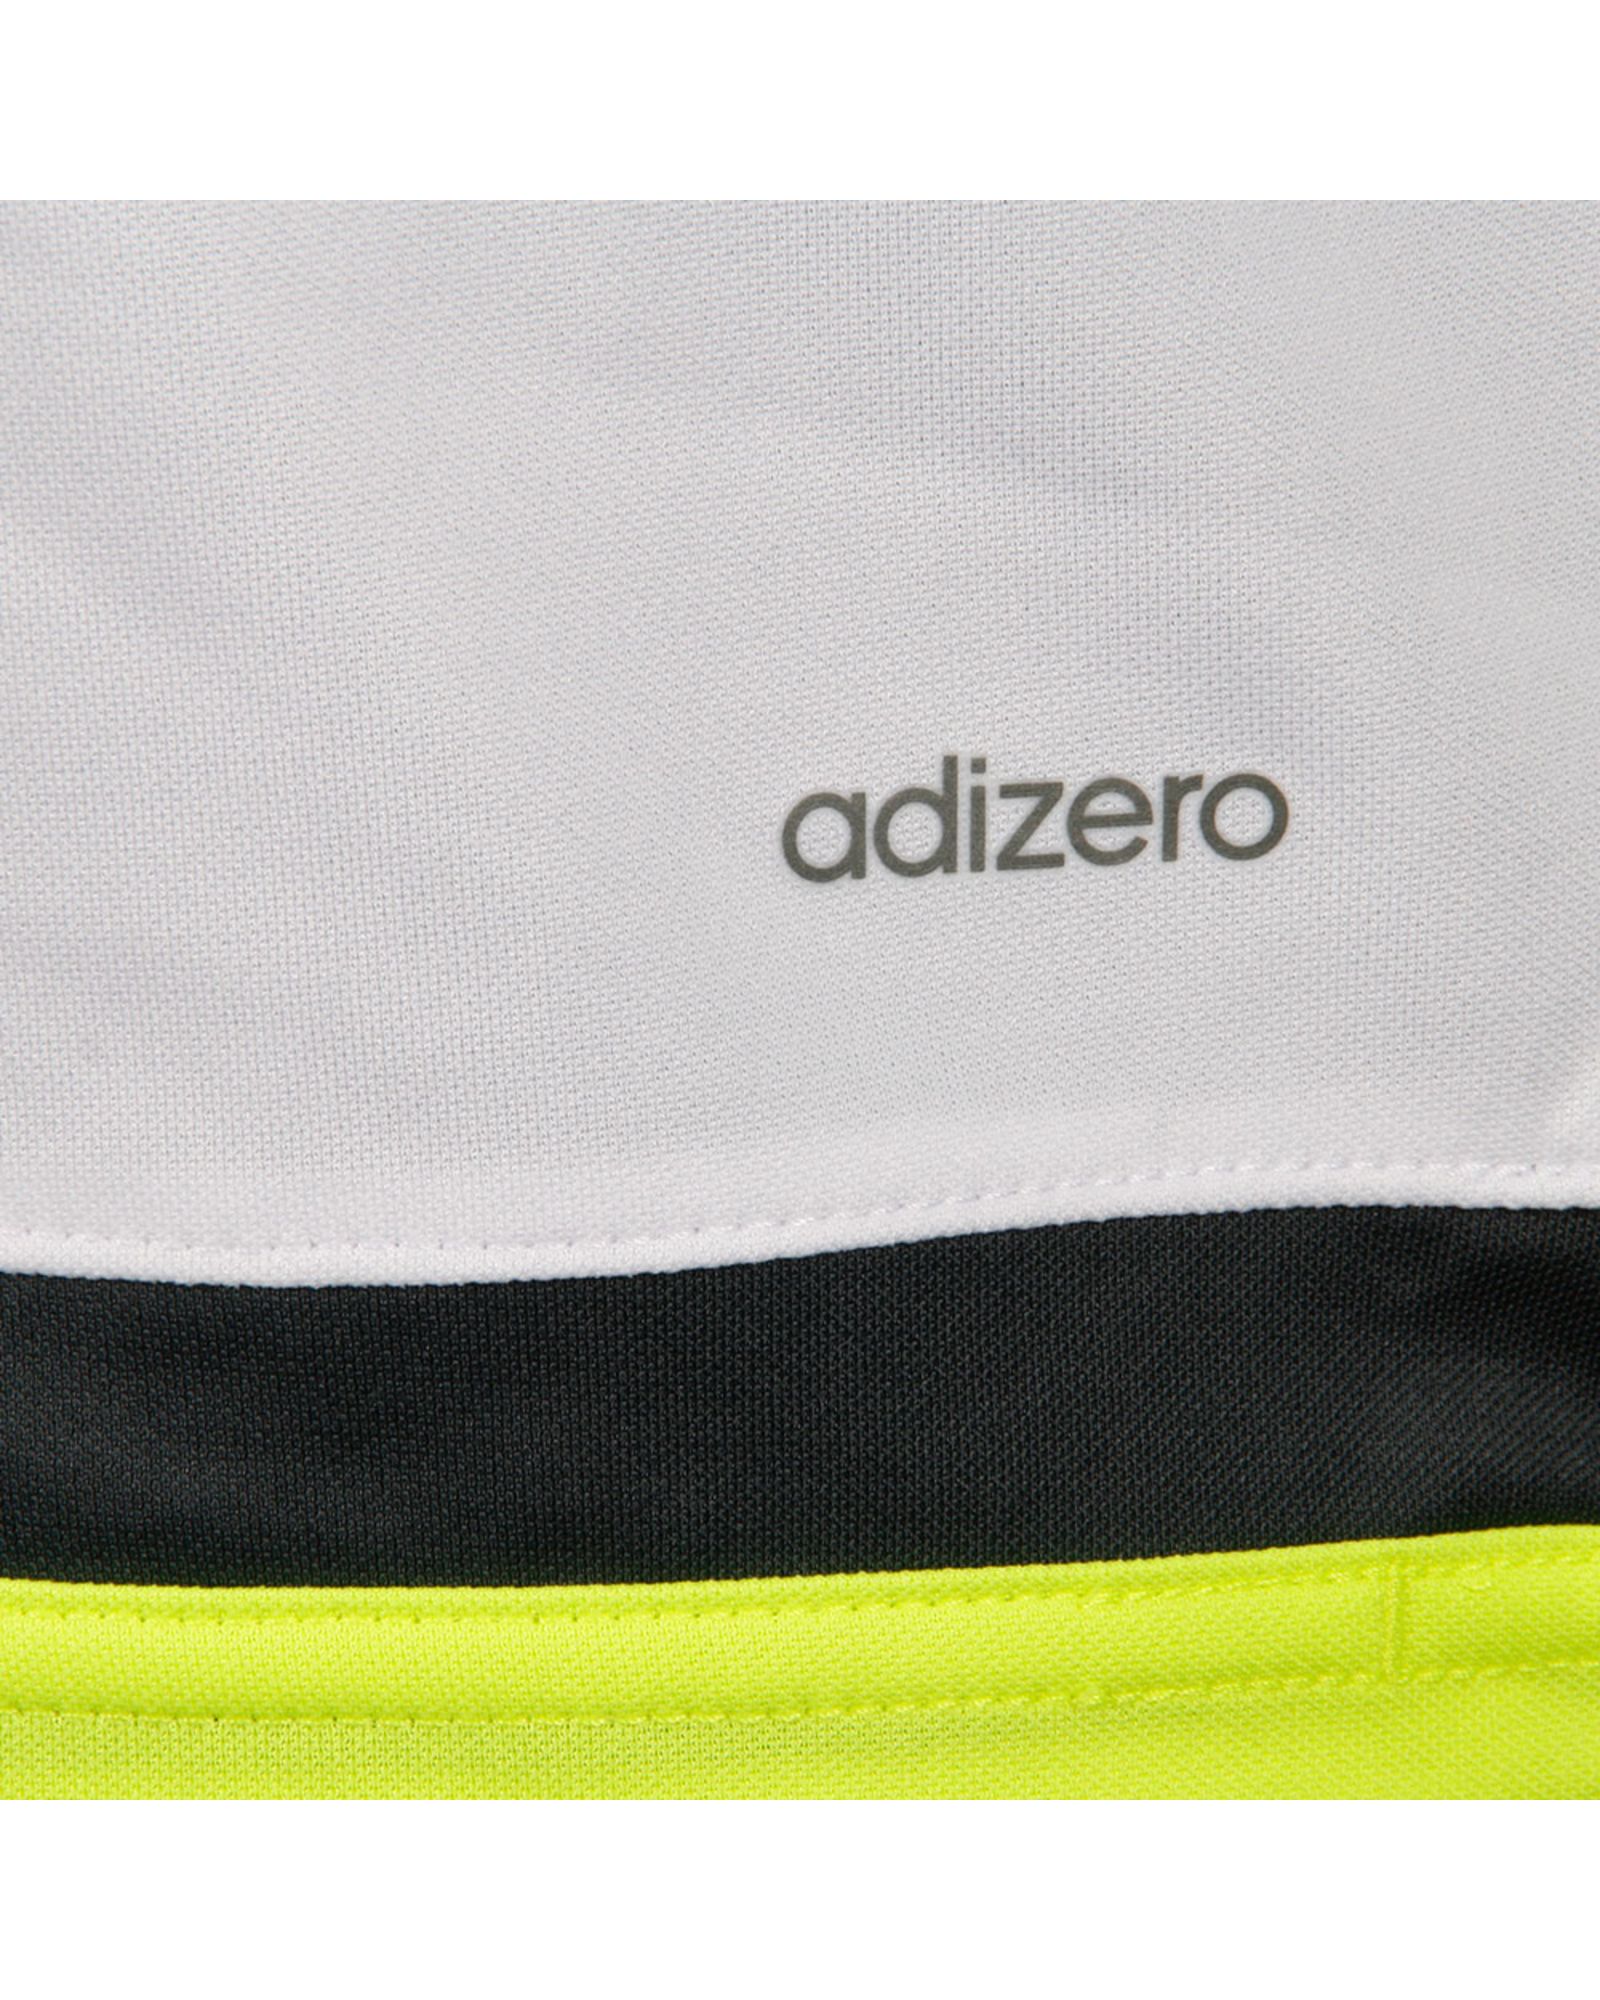 Camiseta Training Adizero Real Madrid 2015/2016 Blanco  - Fútbol Factory